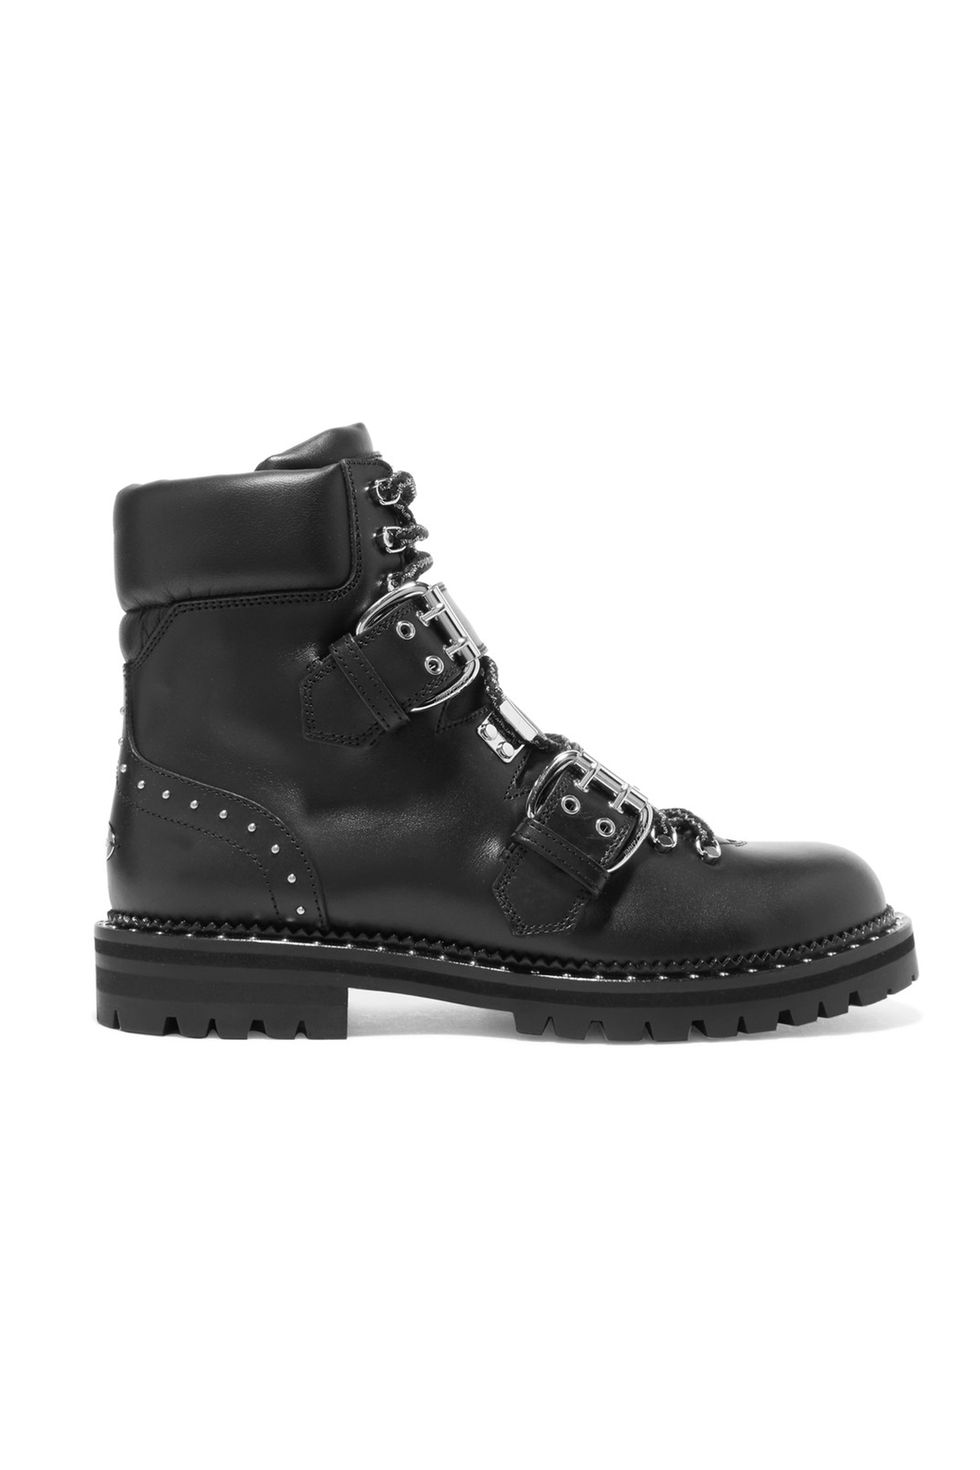 Shoe, Footwear, Black, Boot, Work boots, Hiking boot, Sneakers, Steel-toe boot, Leather, 